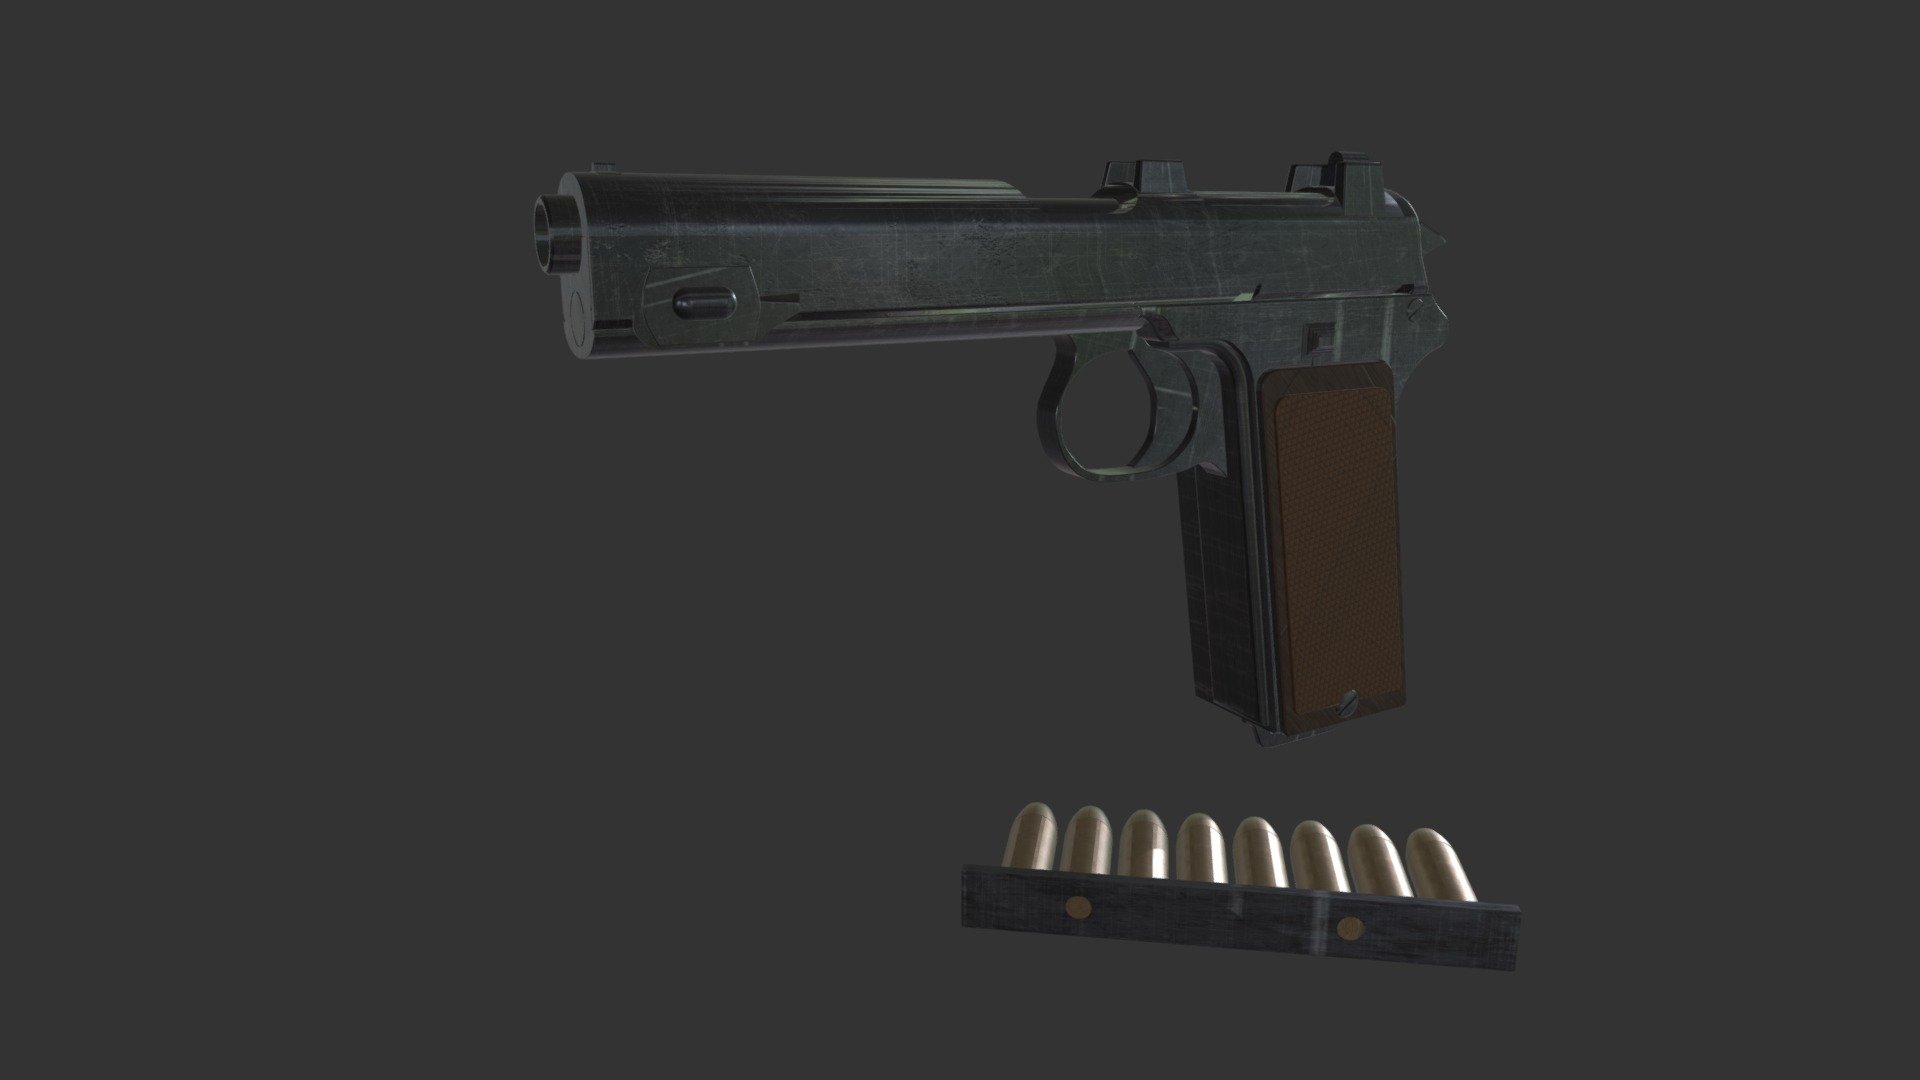 Steyr M1912 pistol